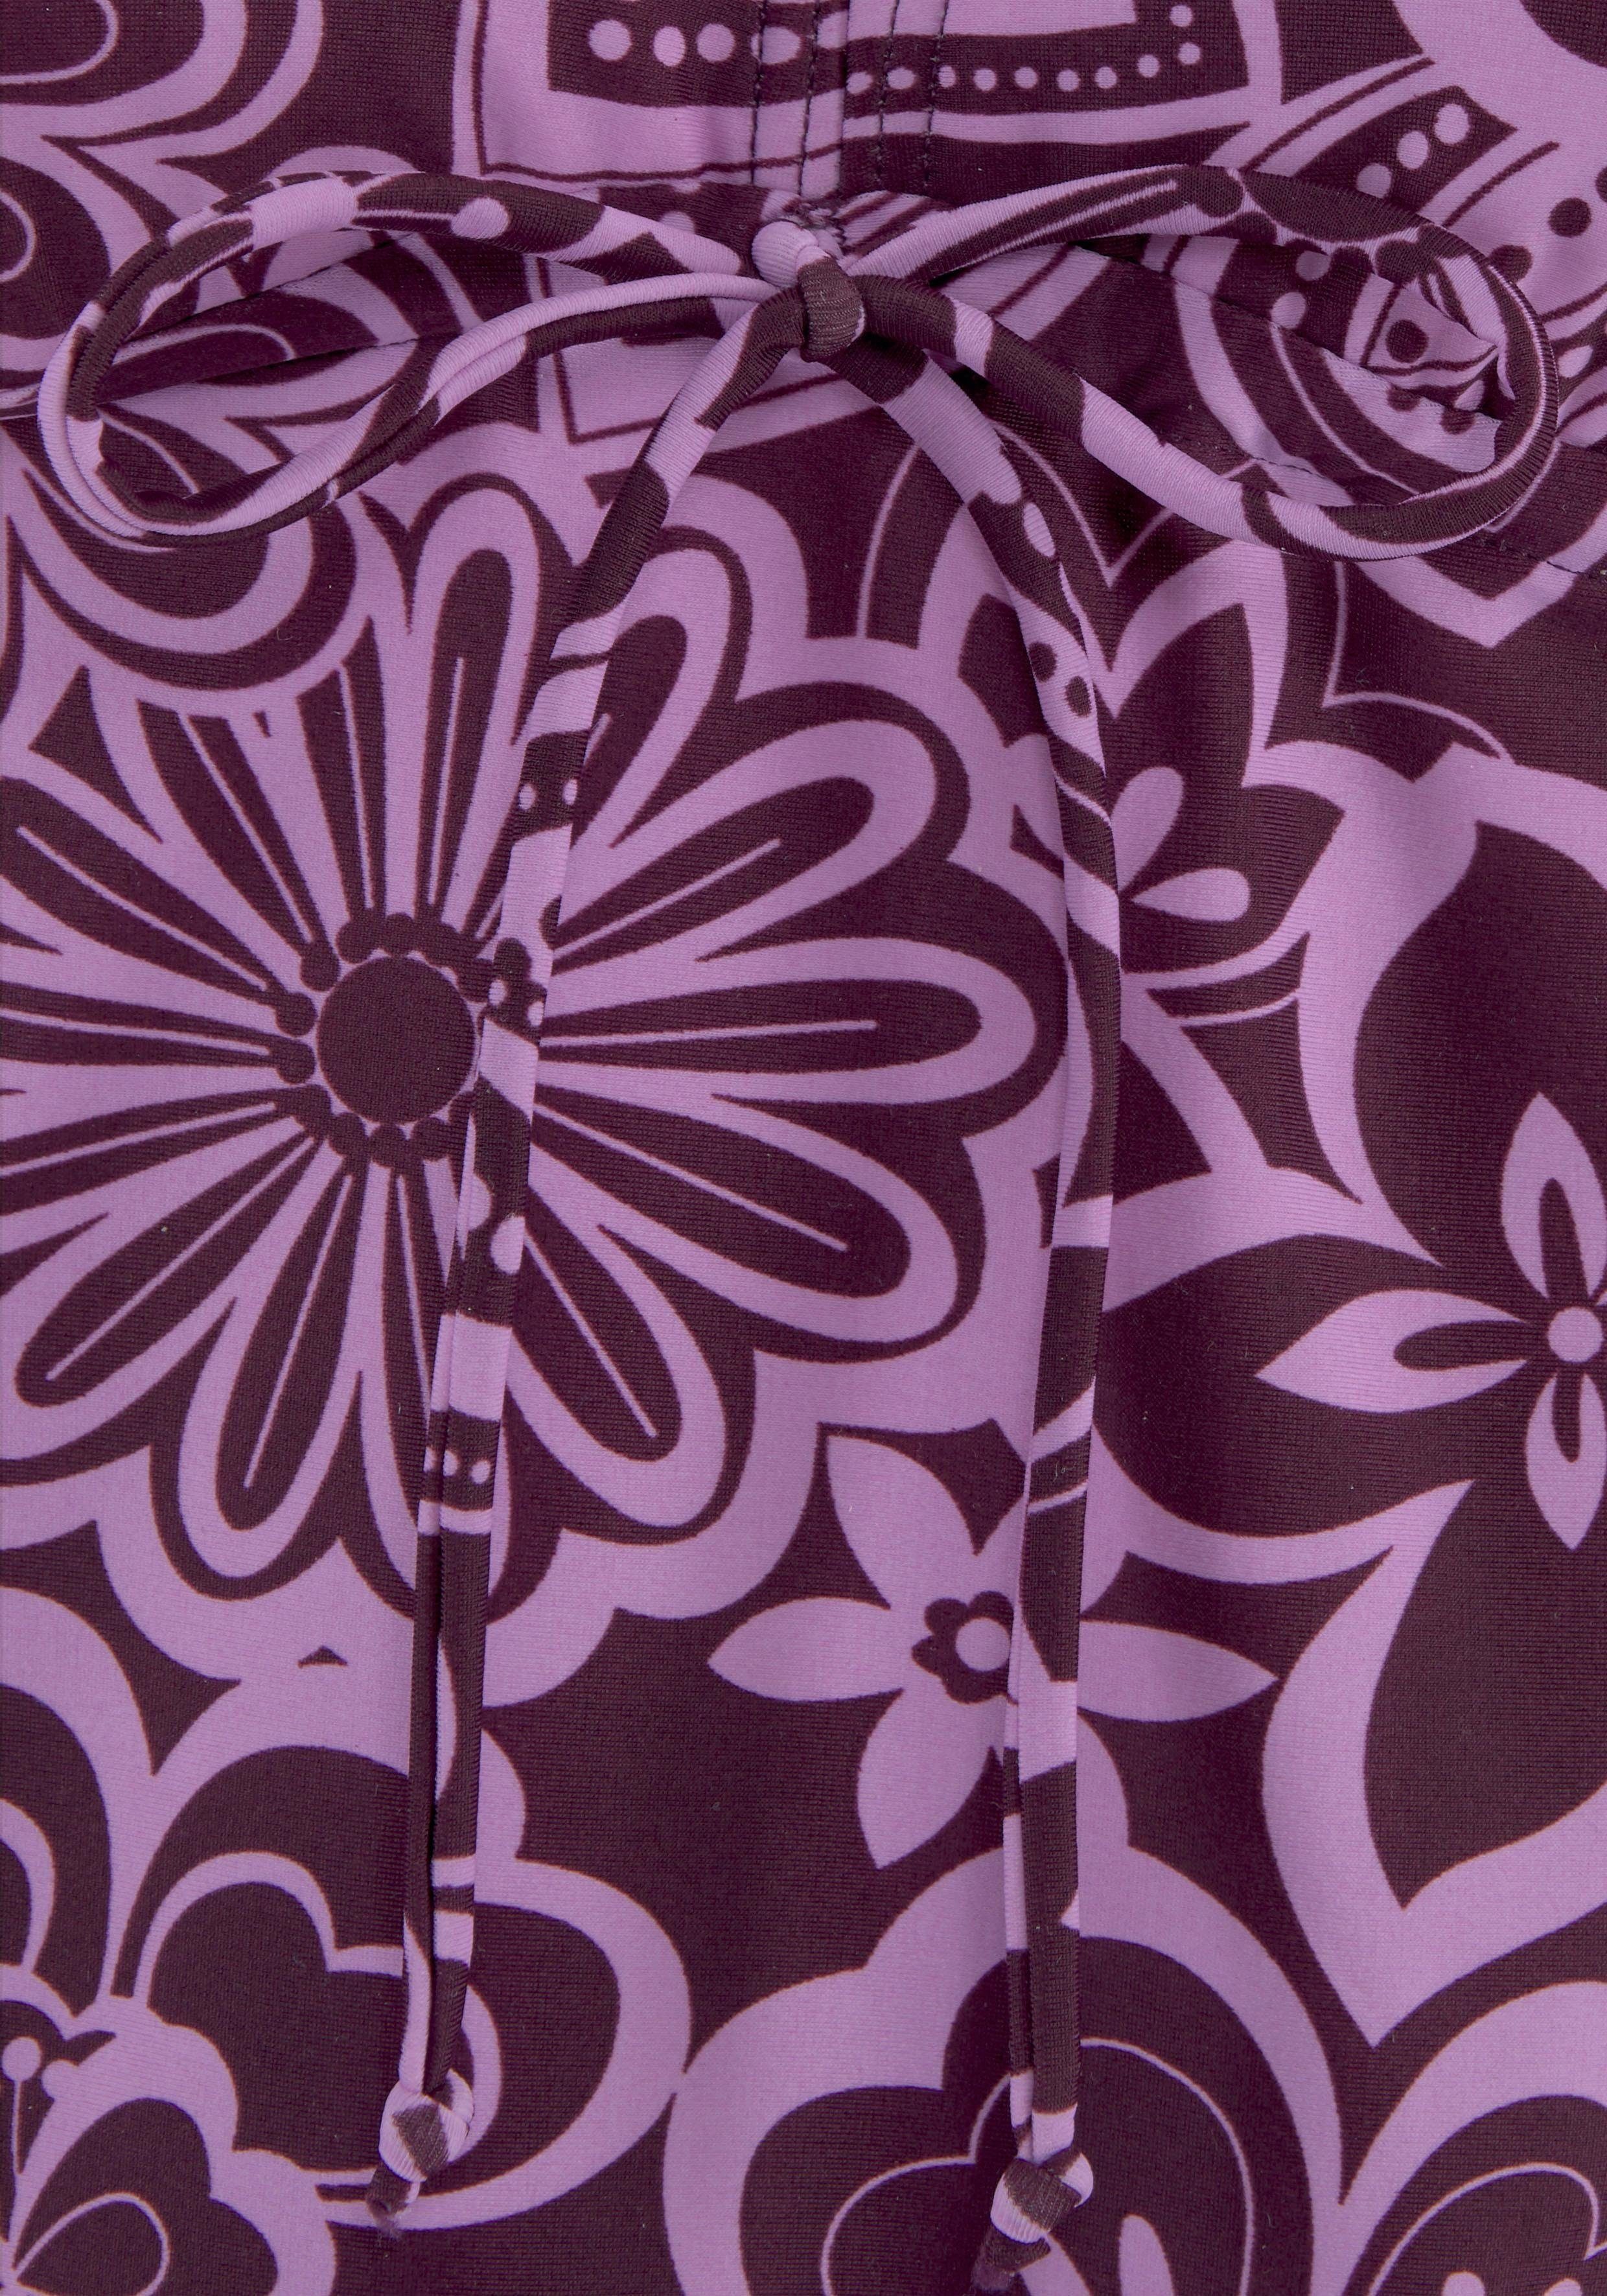 Bügel-Tankini H.I.S lila-bedruckt Floraldesign im schönen